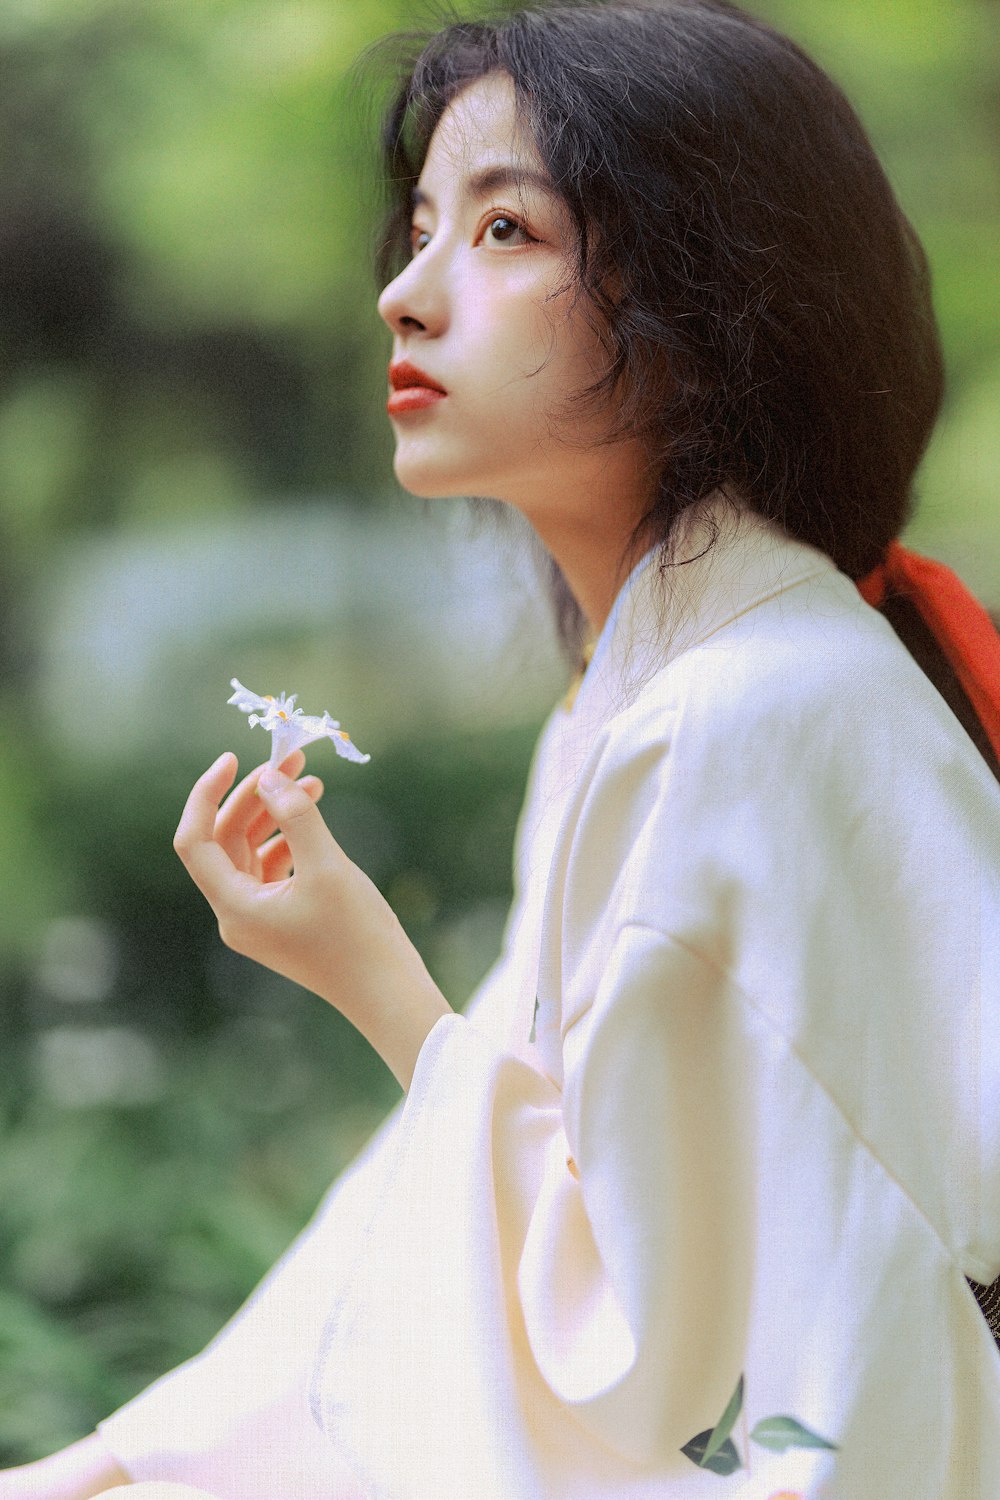 woman in white long sleeve shirt holding white flower